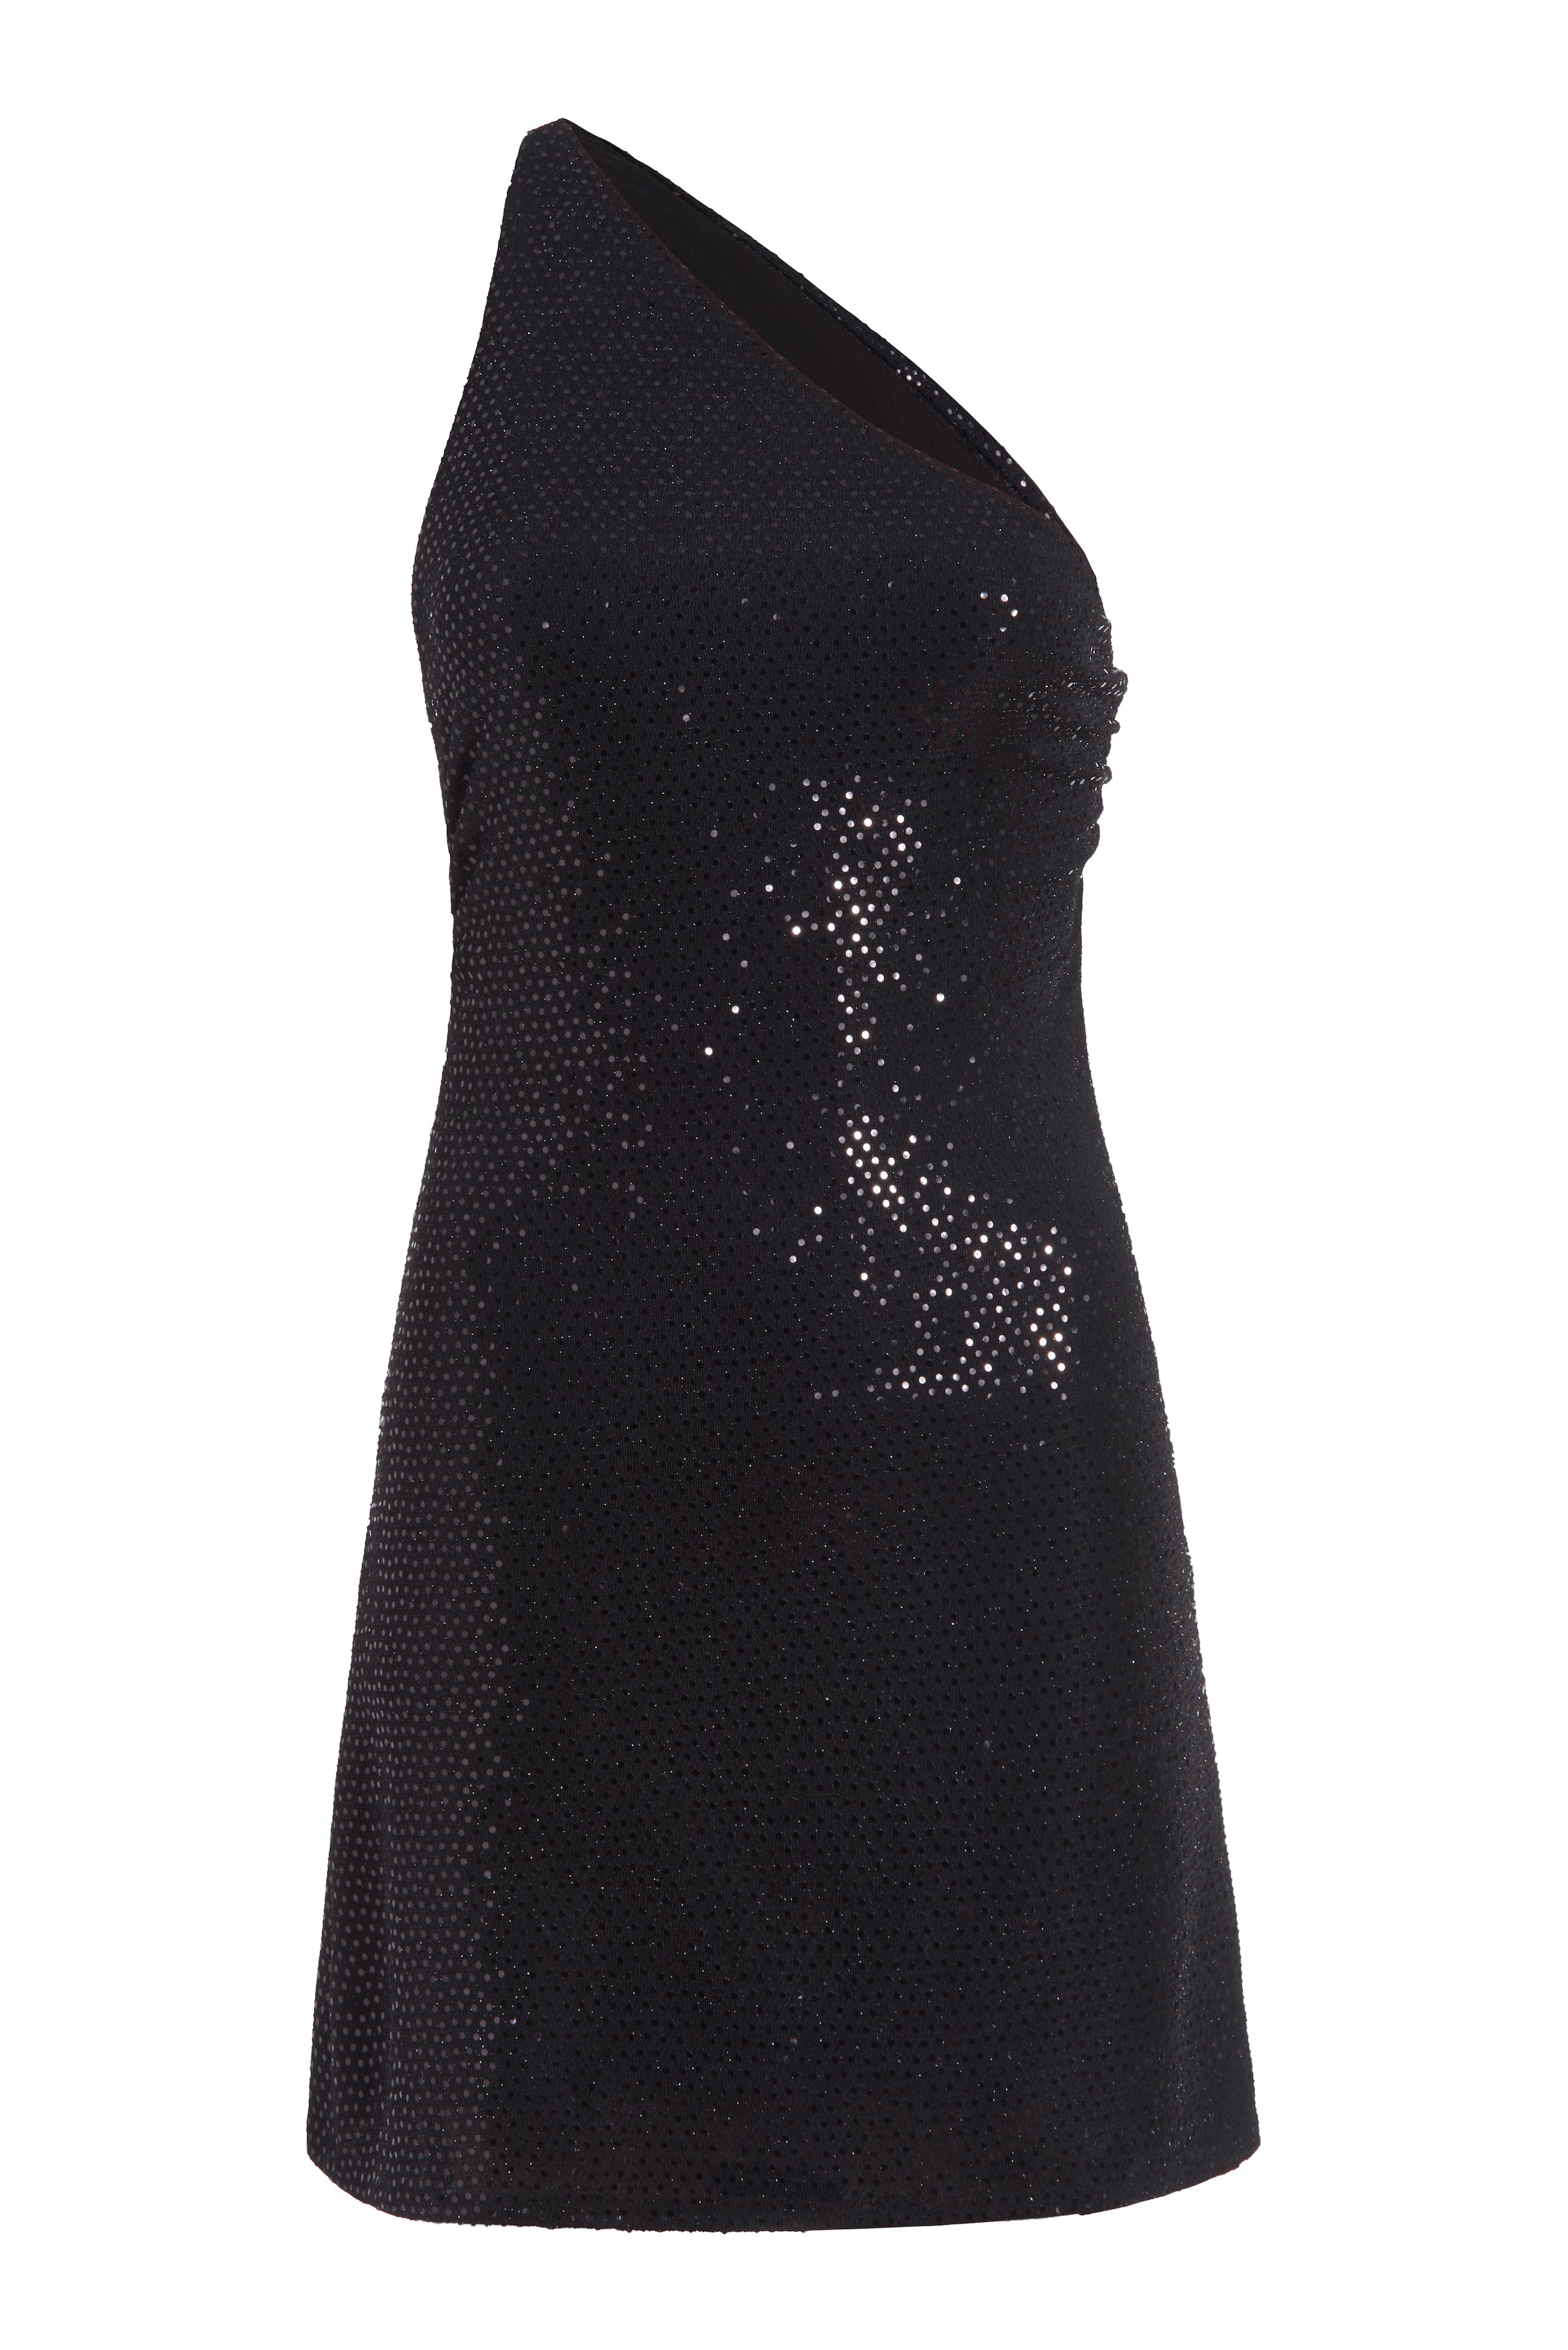 Caddy Black Confetti Dot One Shoulder Mini Dress